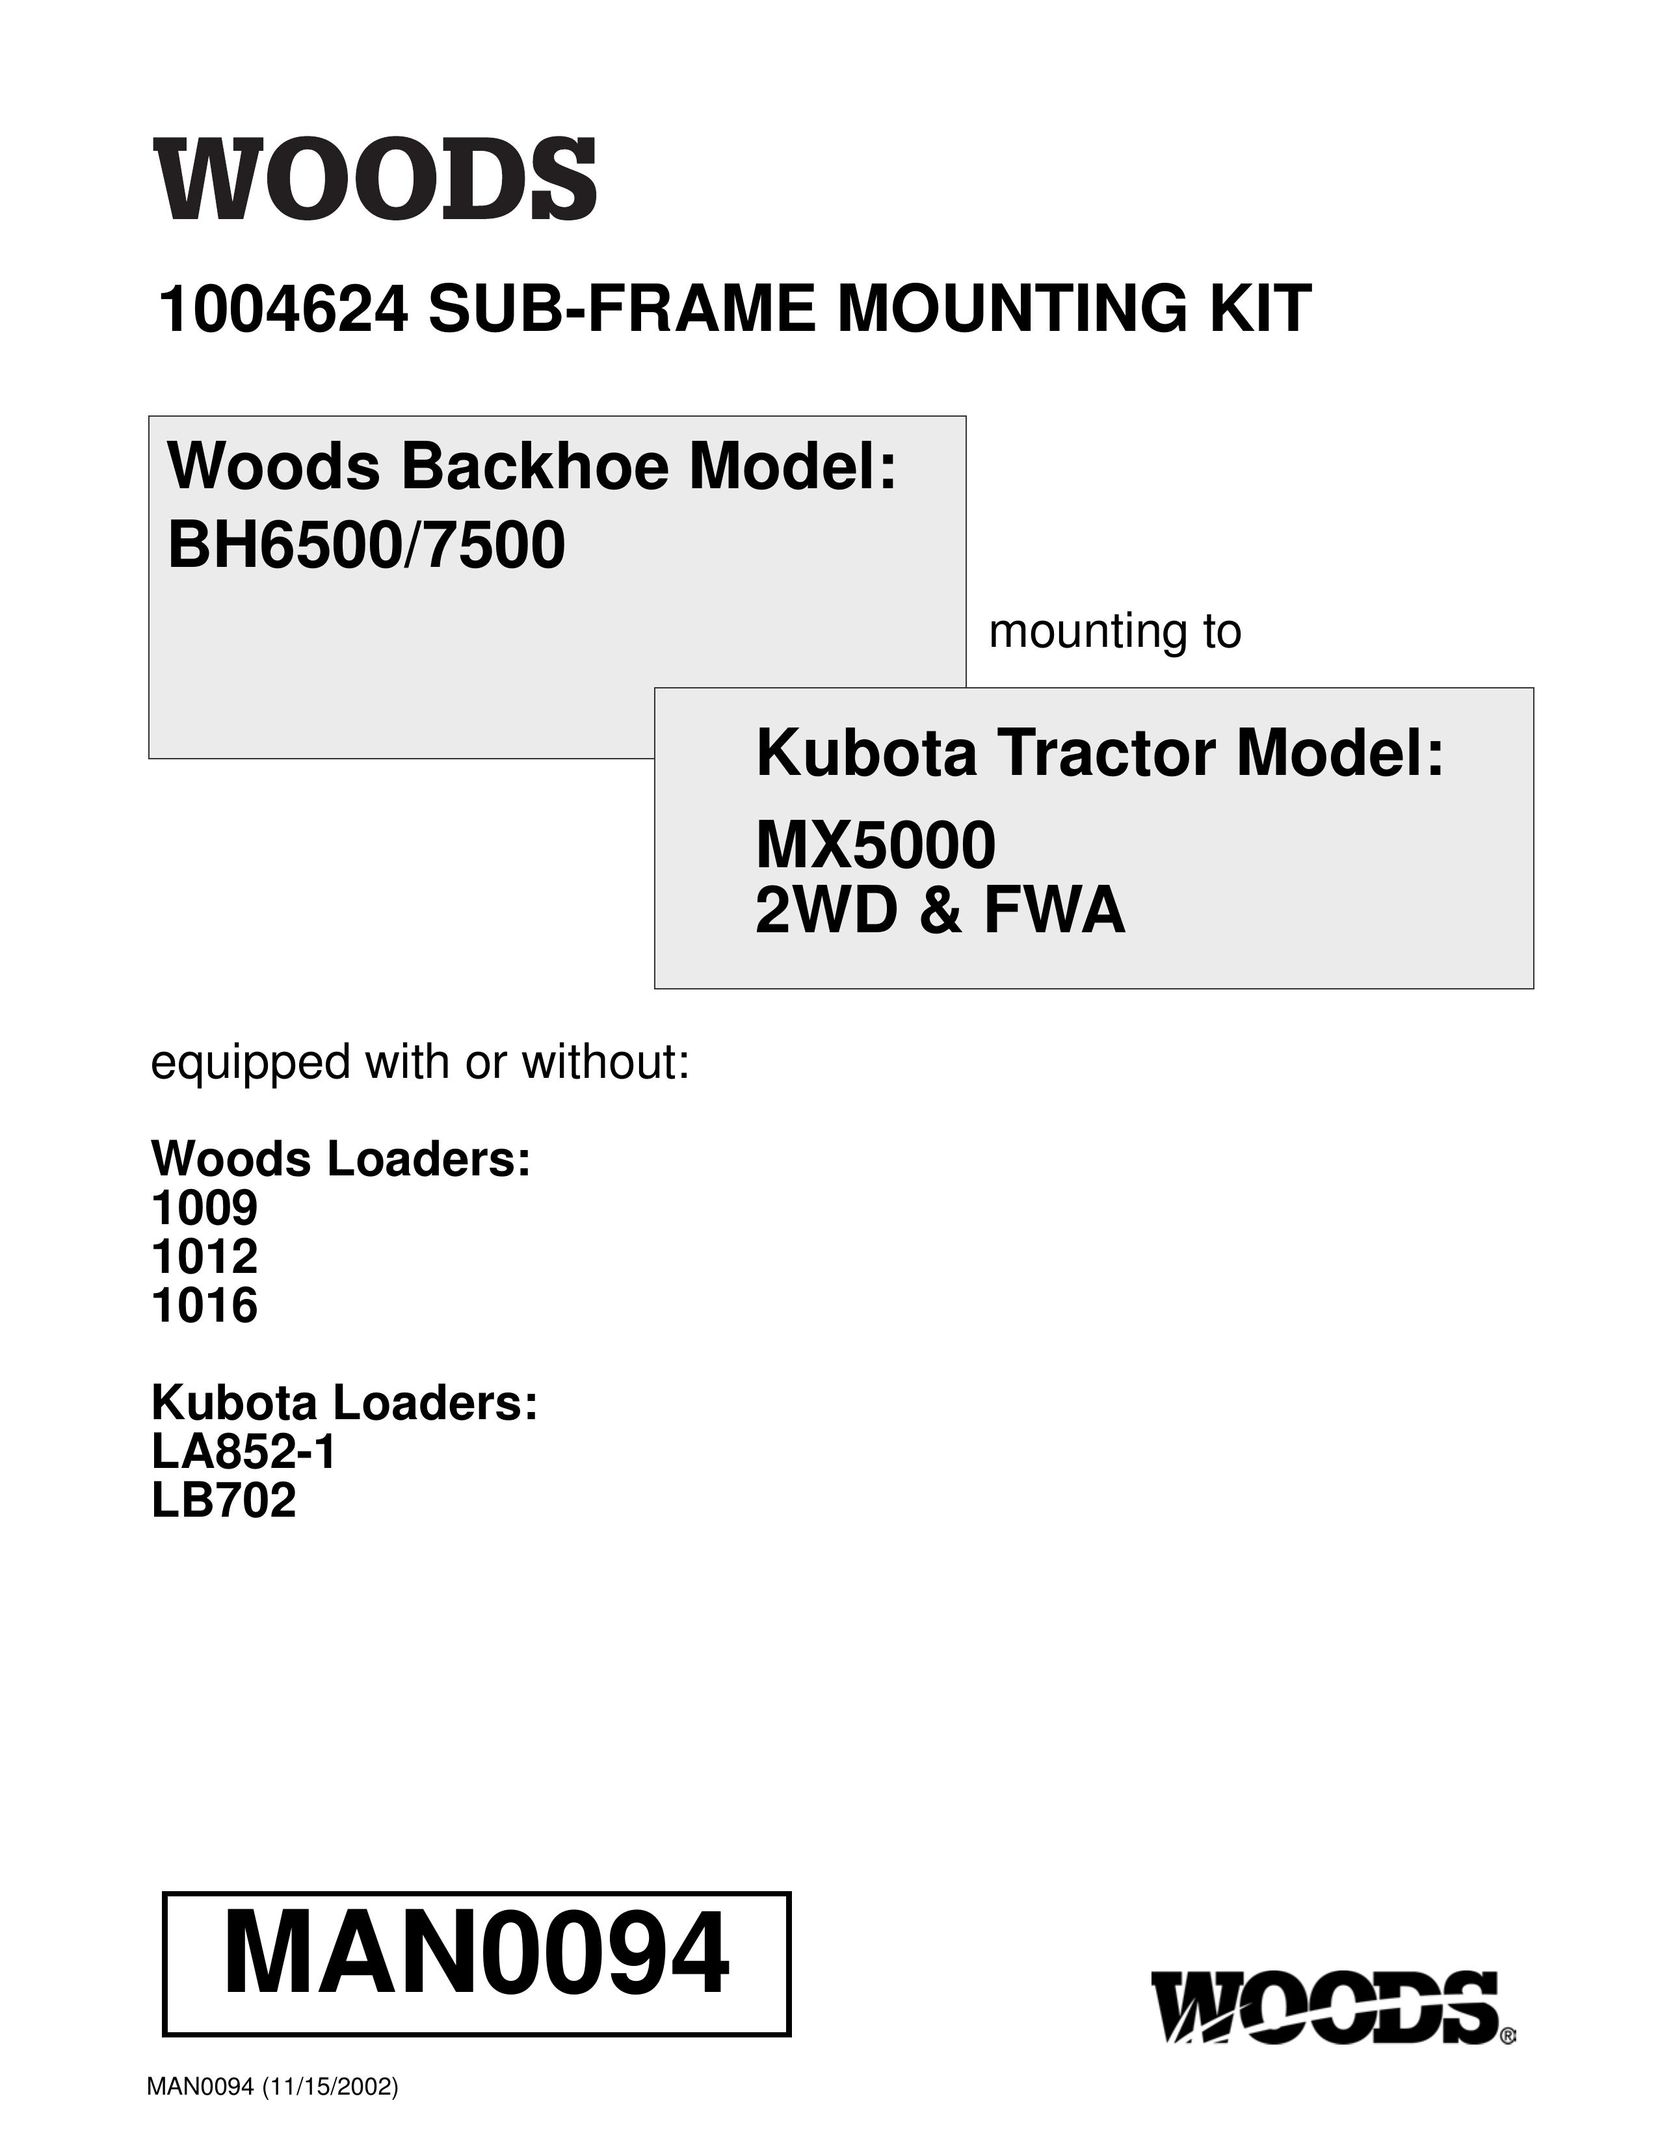 Woods Equipment FWA TV Mount User Manual